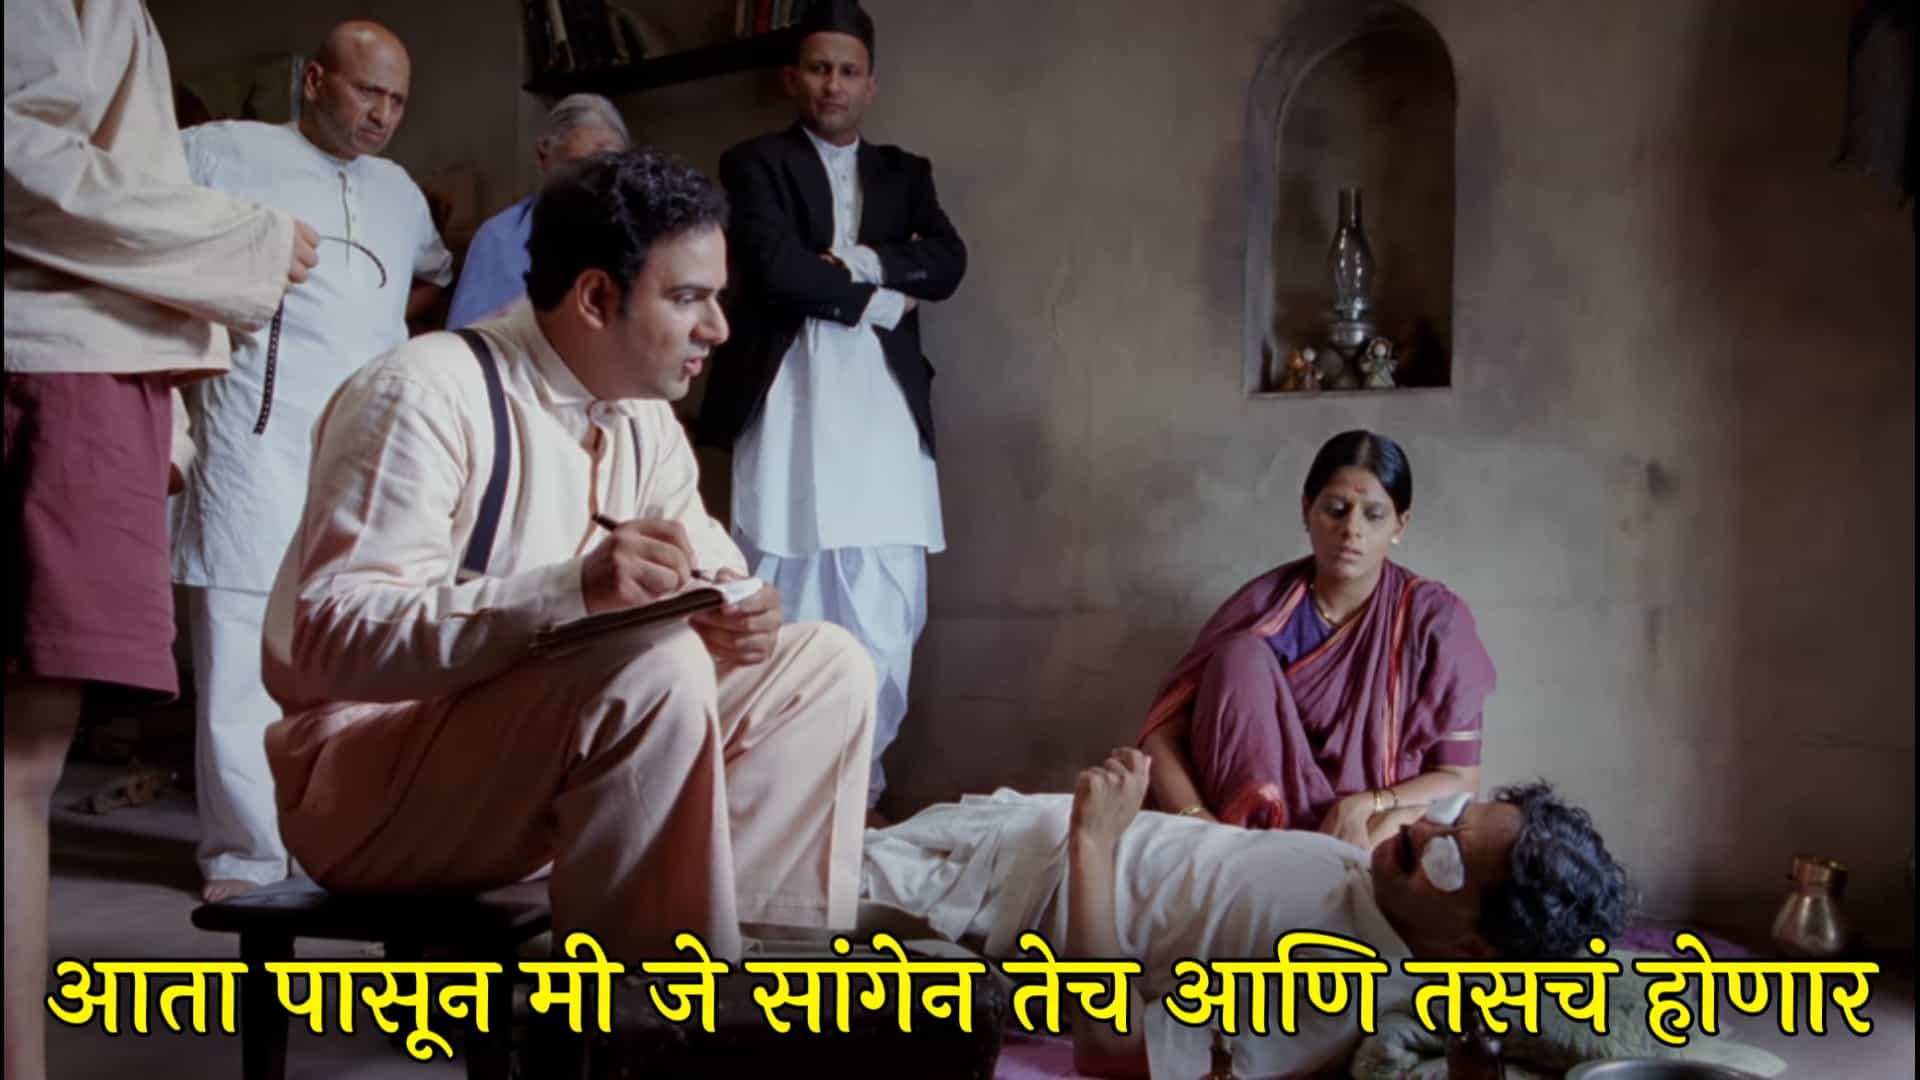 Marathi Movie Meme Templates